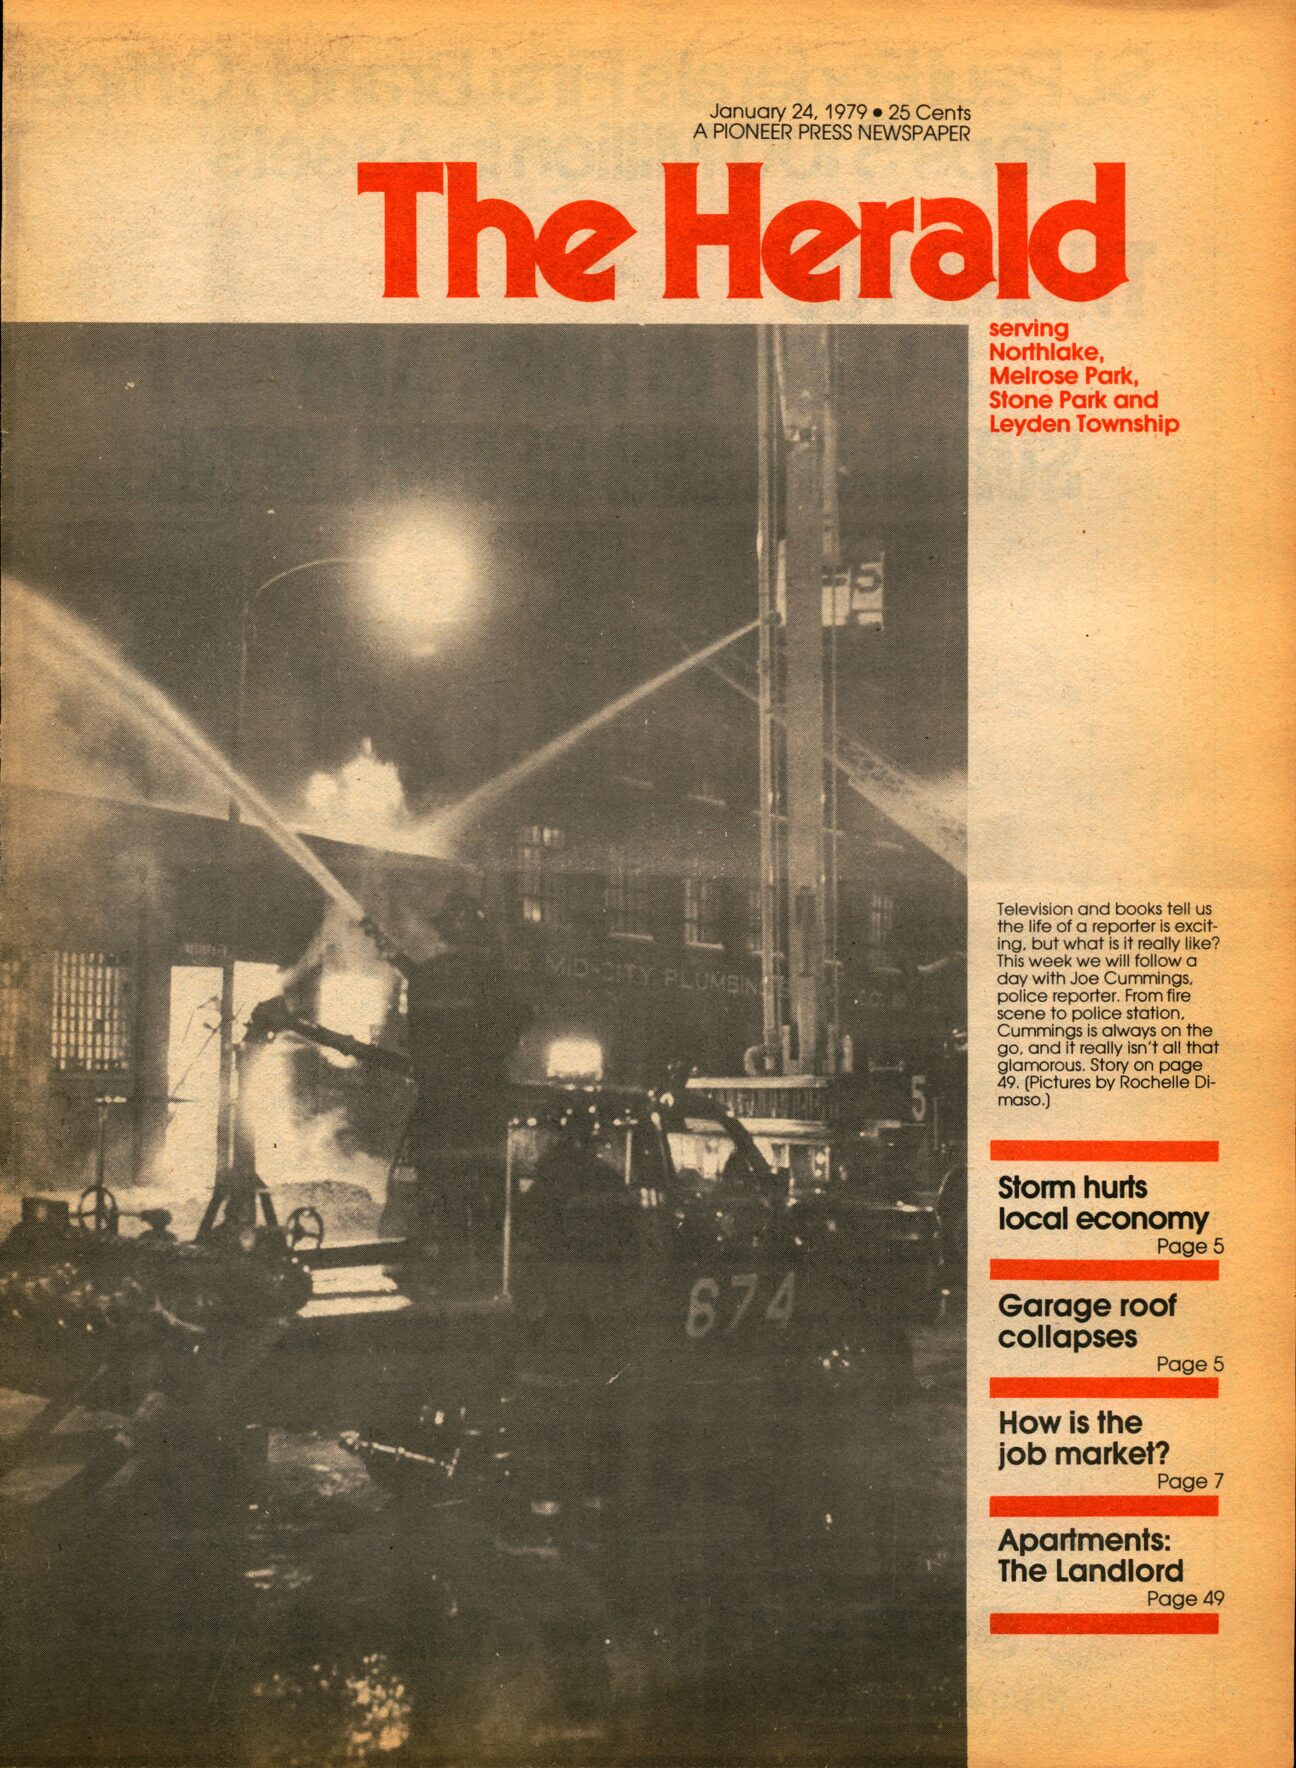 The Herald – 19790124